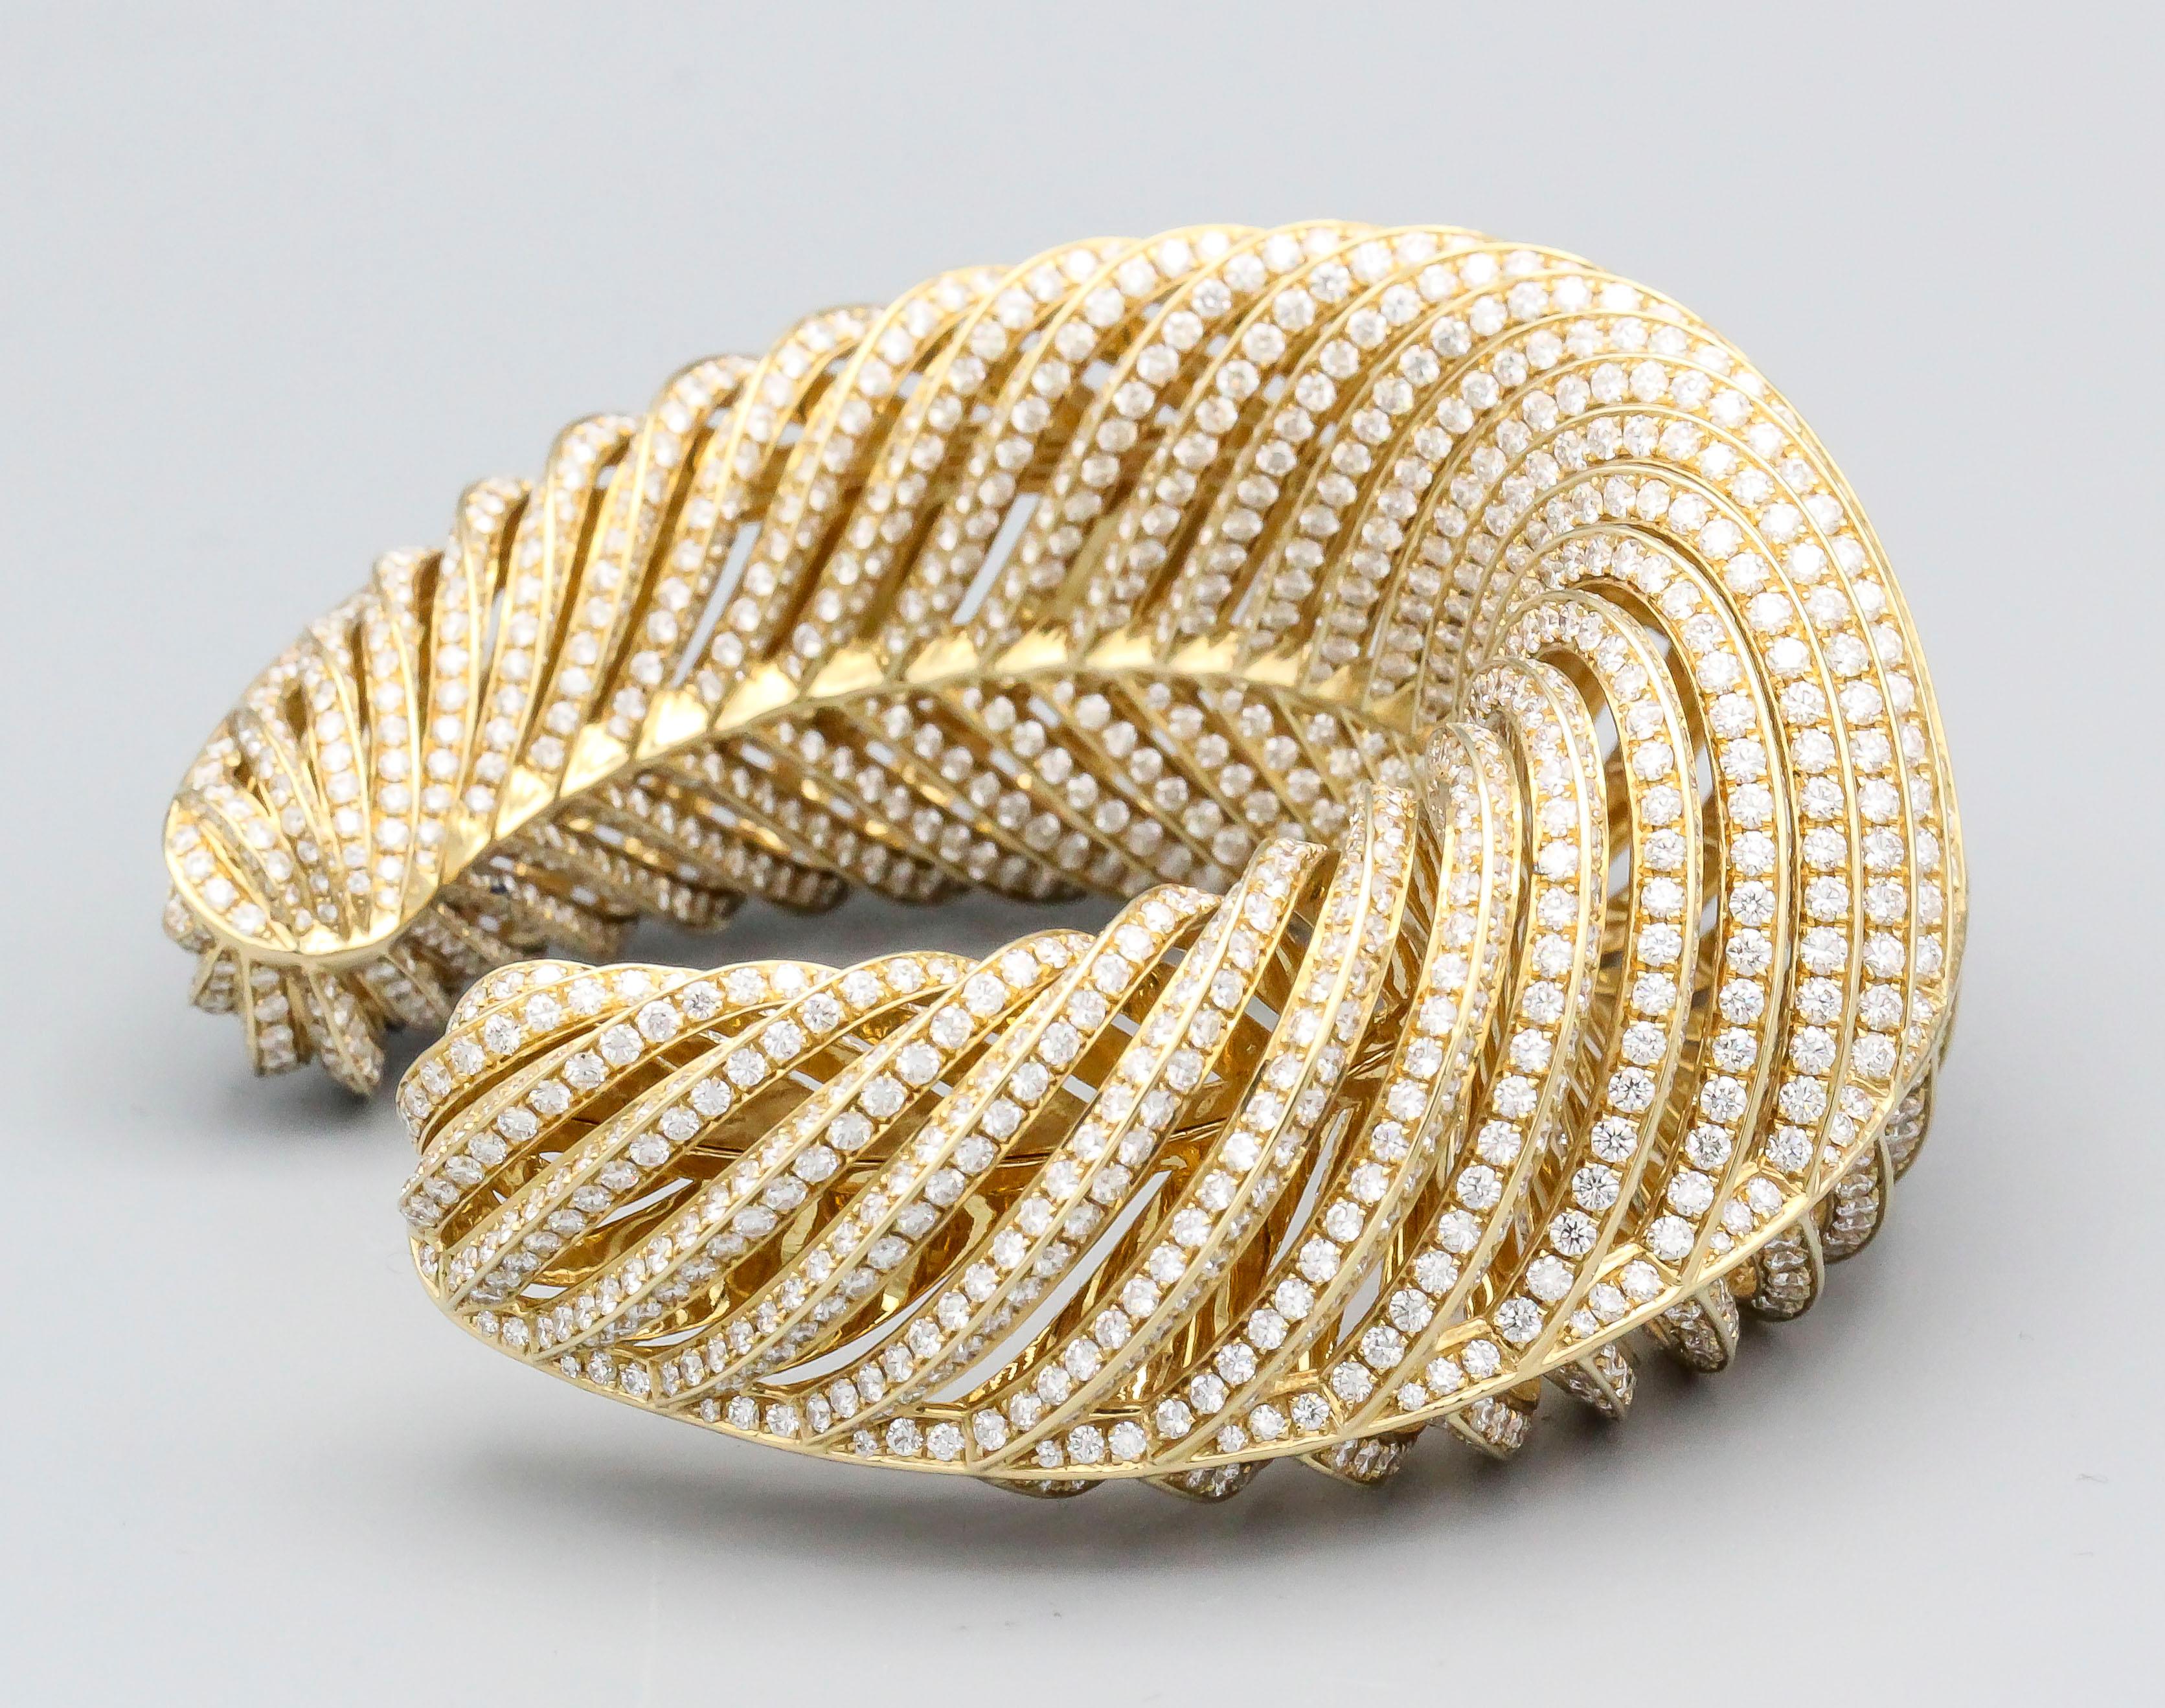 Brilliant Cut Tiffany & Co. Diamond 18k Gold Feather-Like Cuff Bracelet For Sale